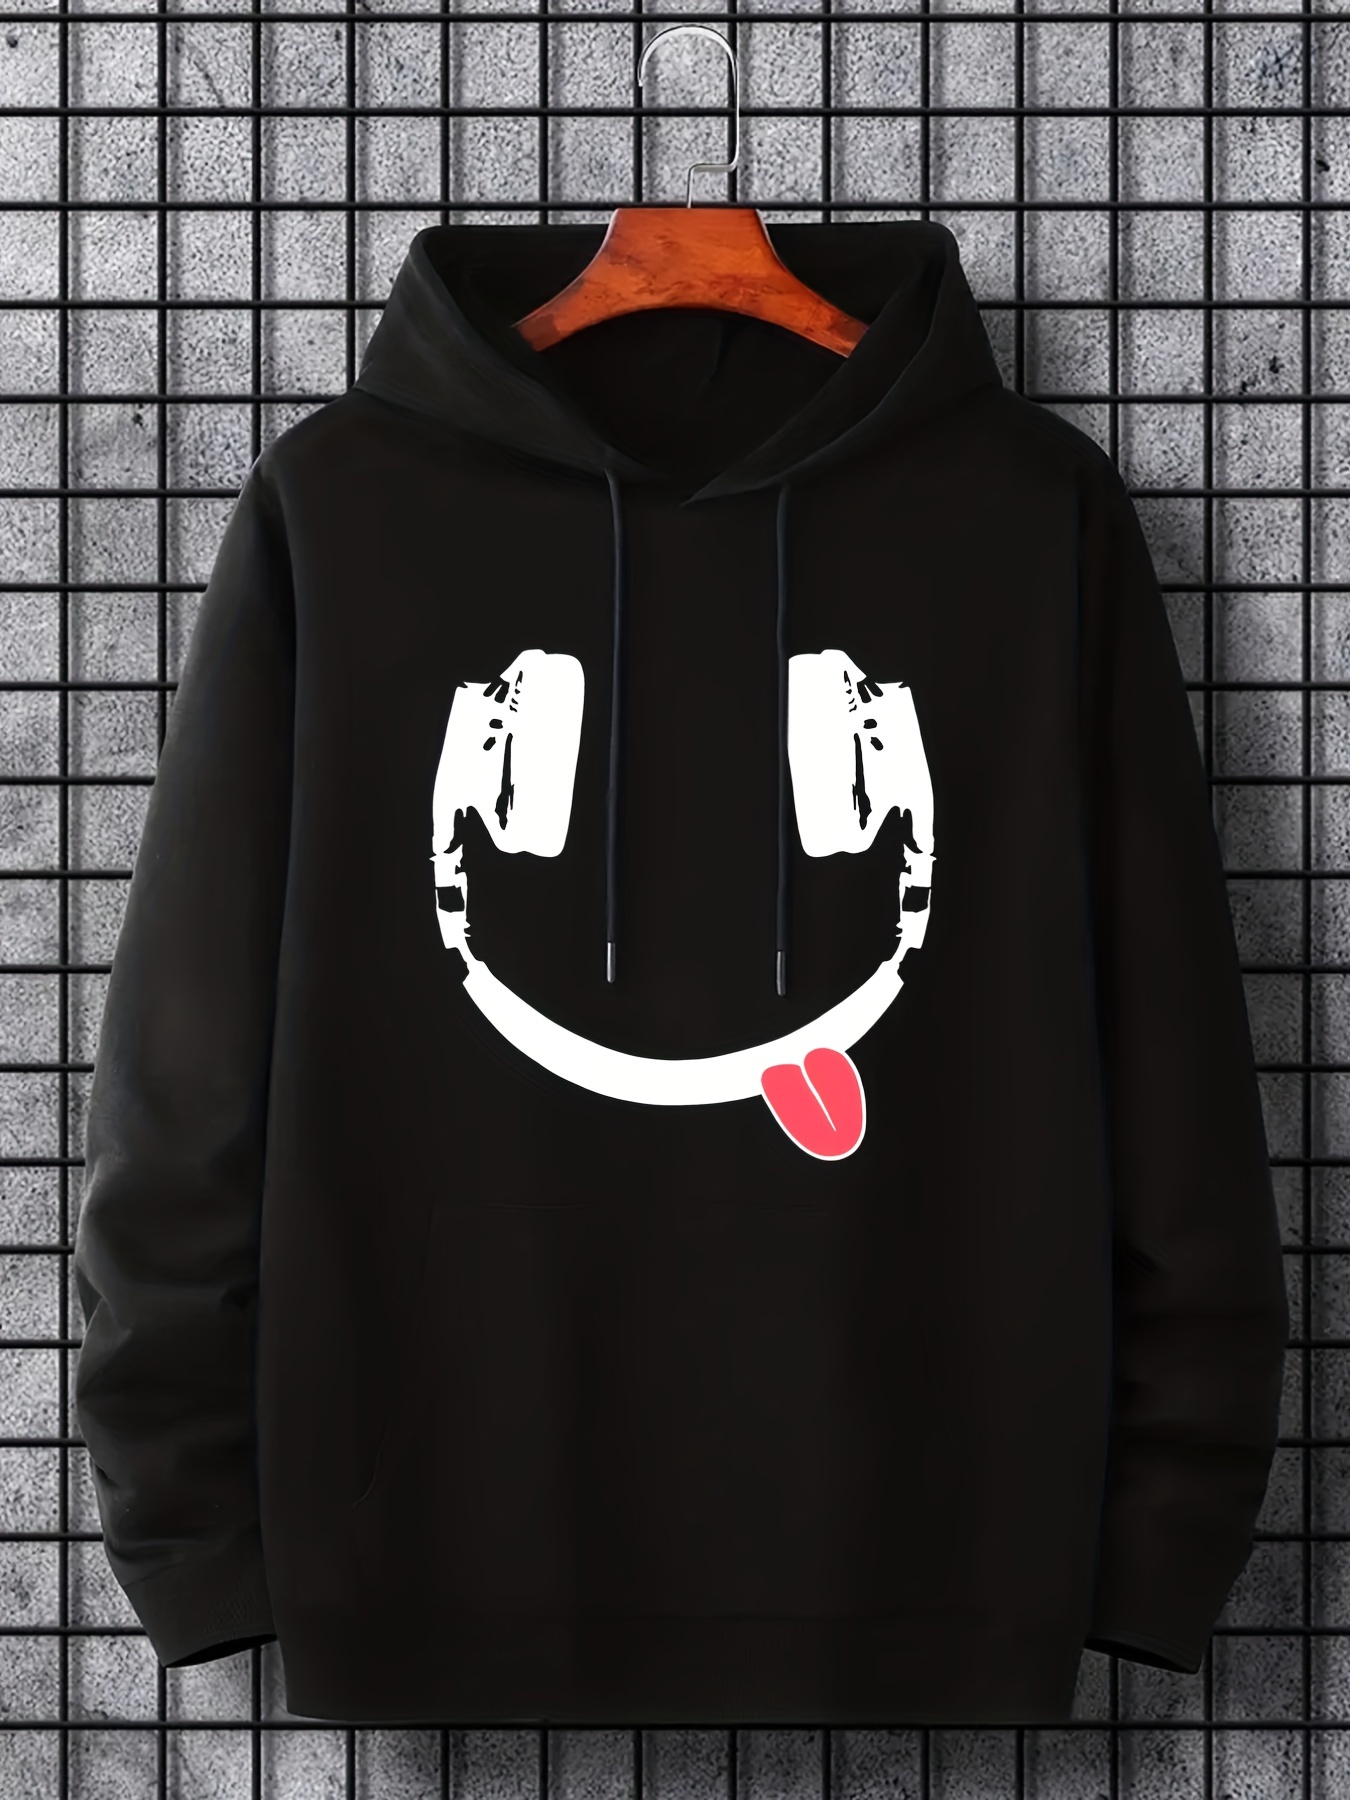 headphone smile print hoodie hoodies for men mens casual graphic design pullover hooded sweatshirt with kangaroo pocket streetwear for winter fall as gifts details 15